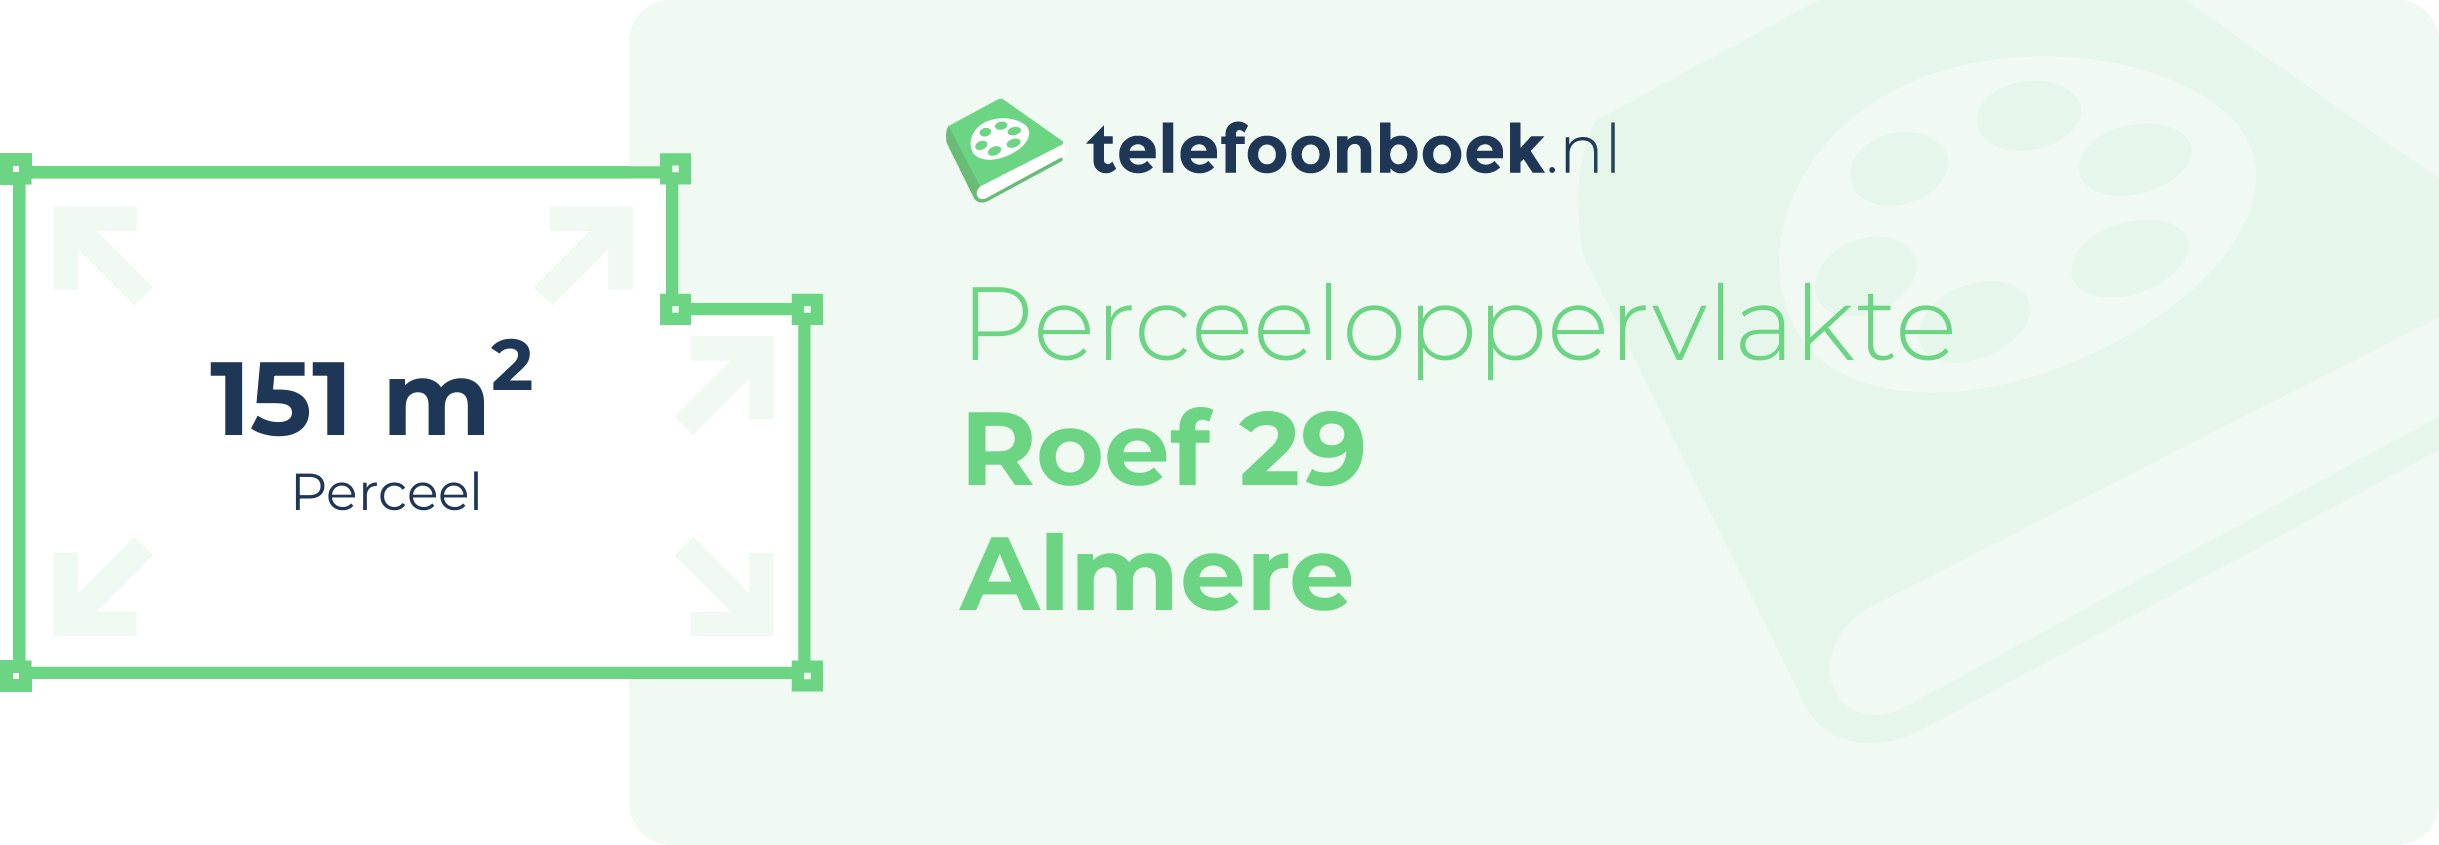 Perceeloppervlakte Roef 29 Almere